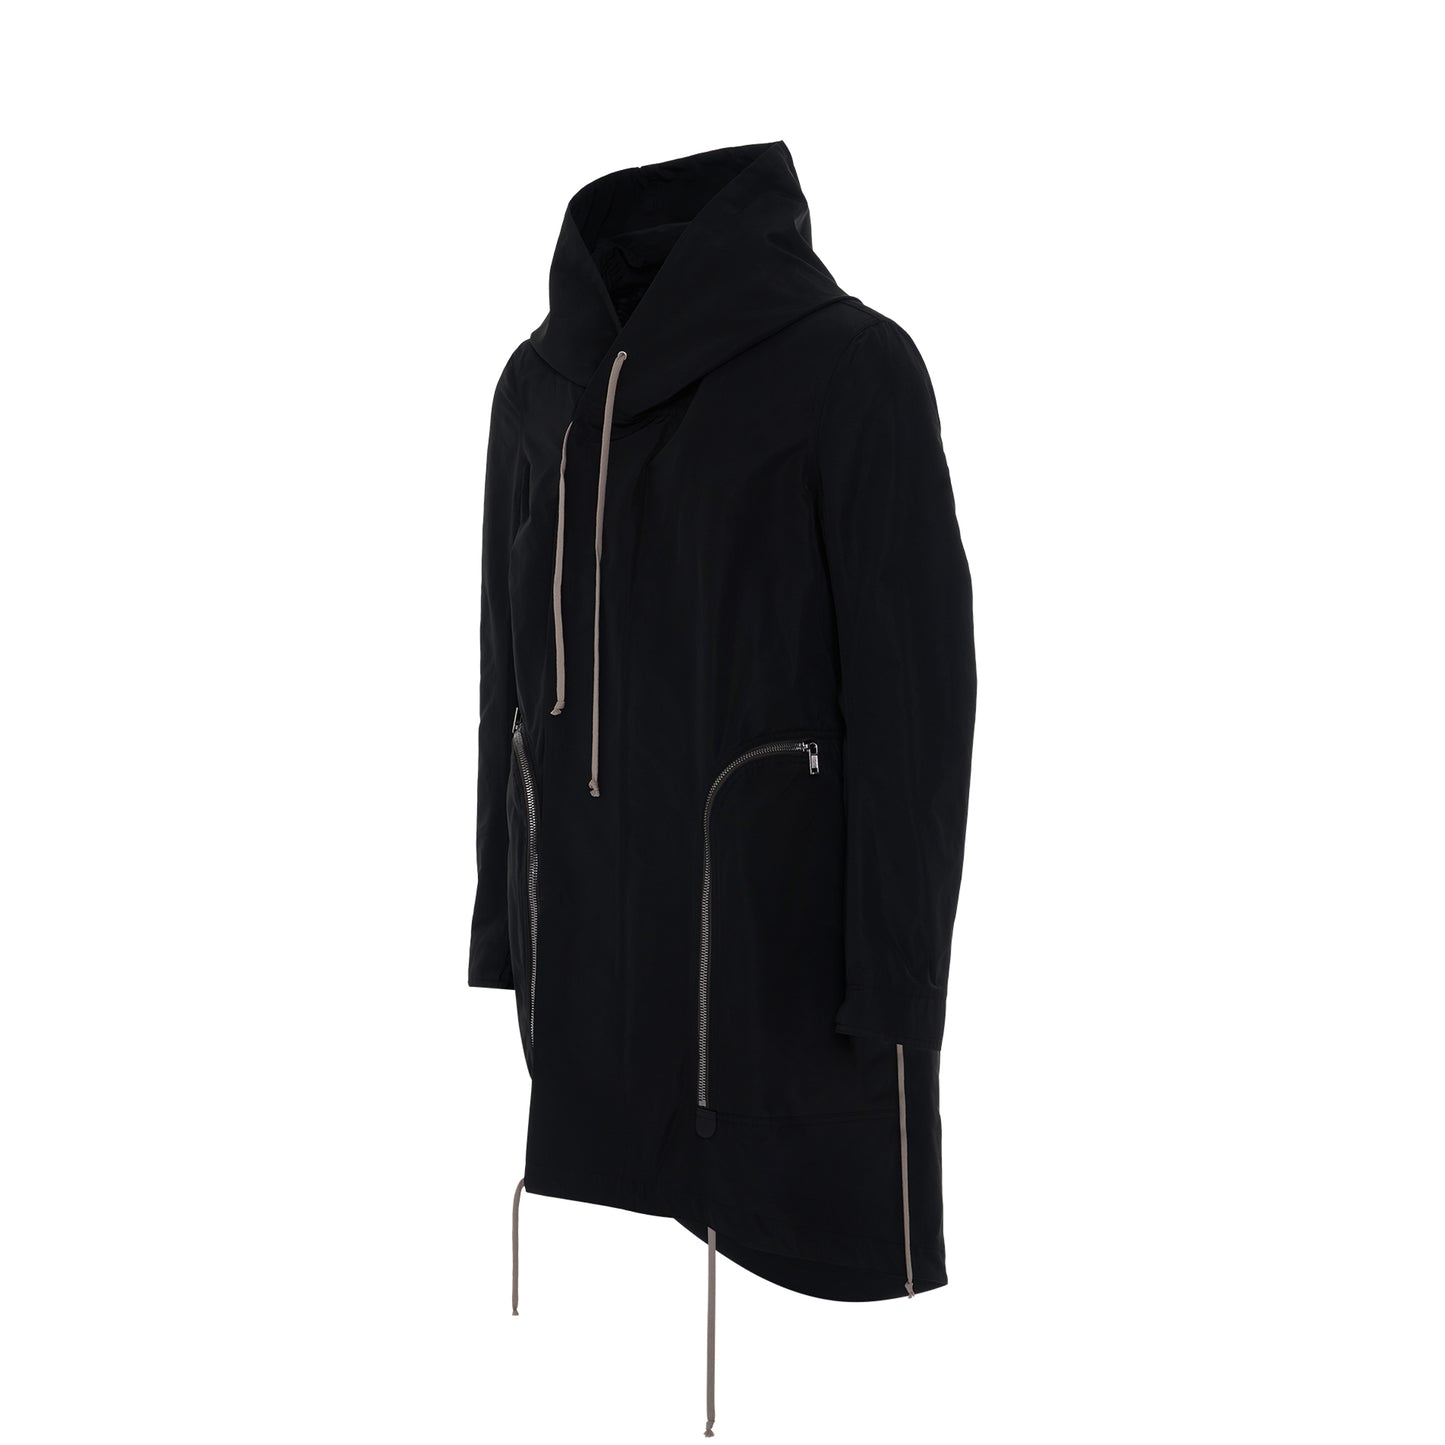 Bauhaus Fishtail Coat with Hood in Black